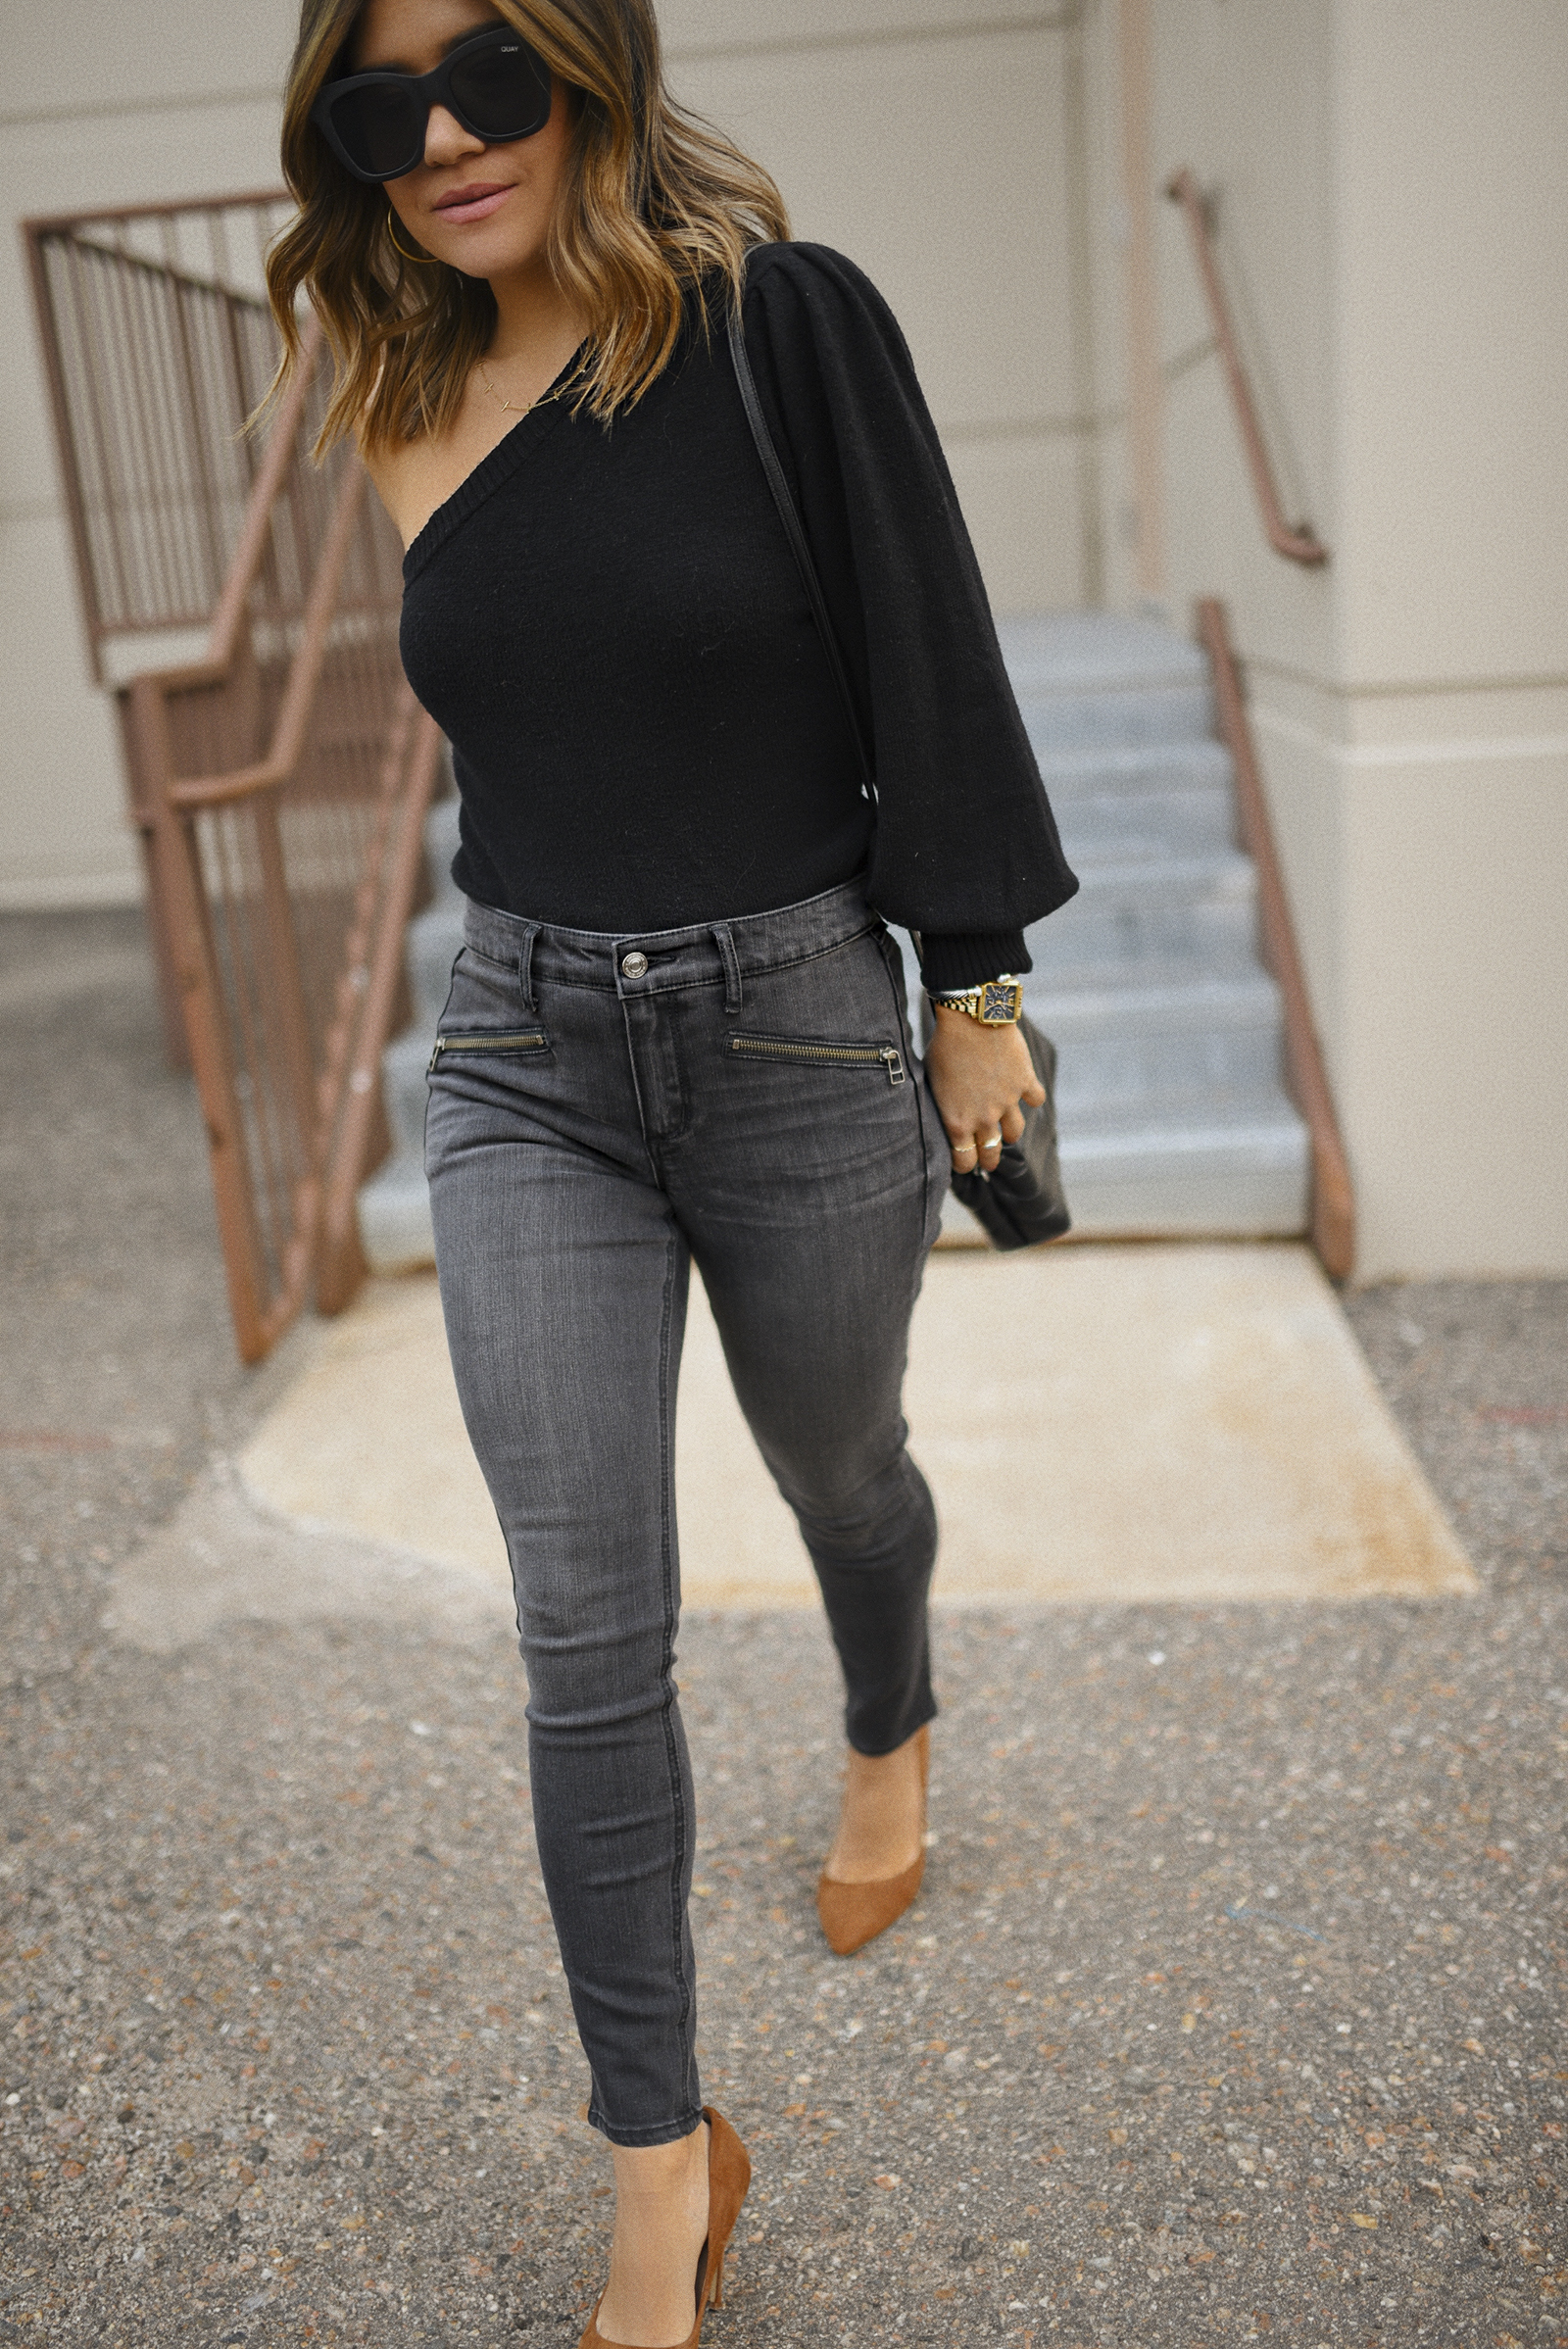 Carolina Hellal of Chic Talk wearing Sofia Jeans holiday collection via Walmart. 